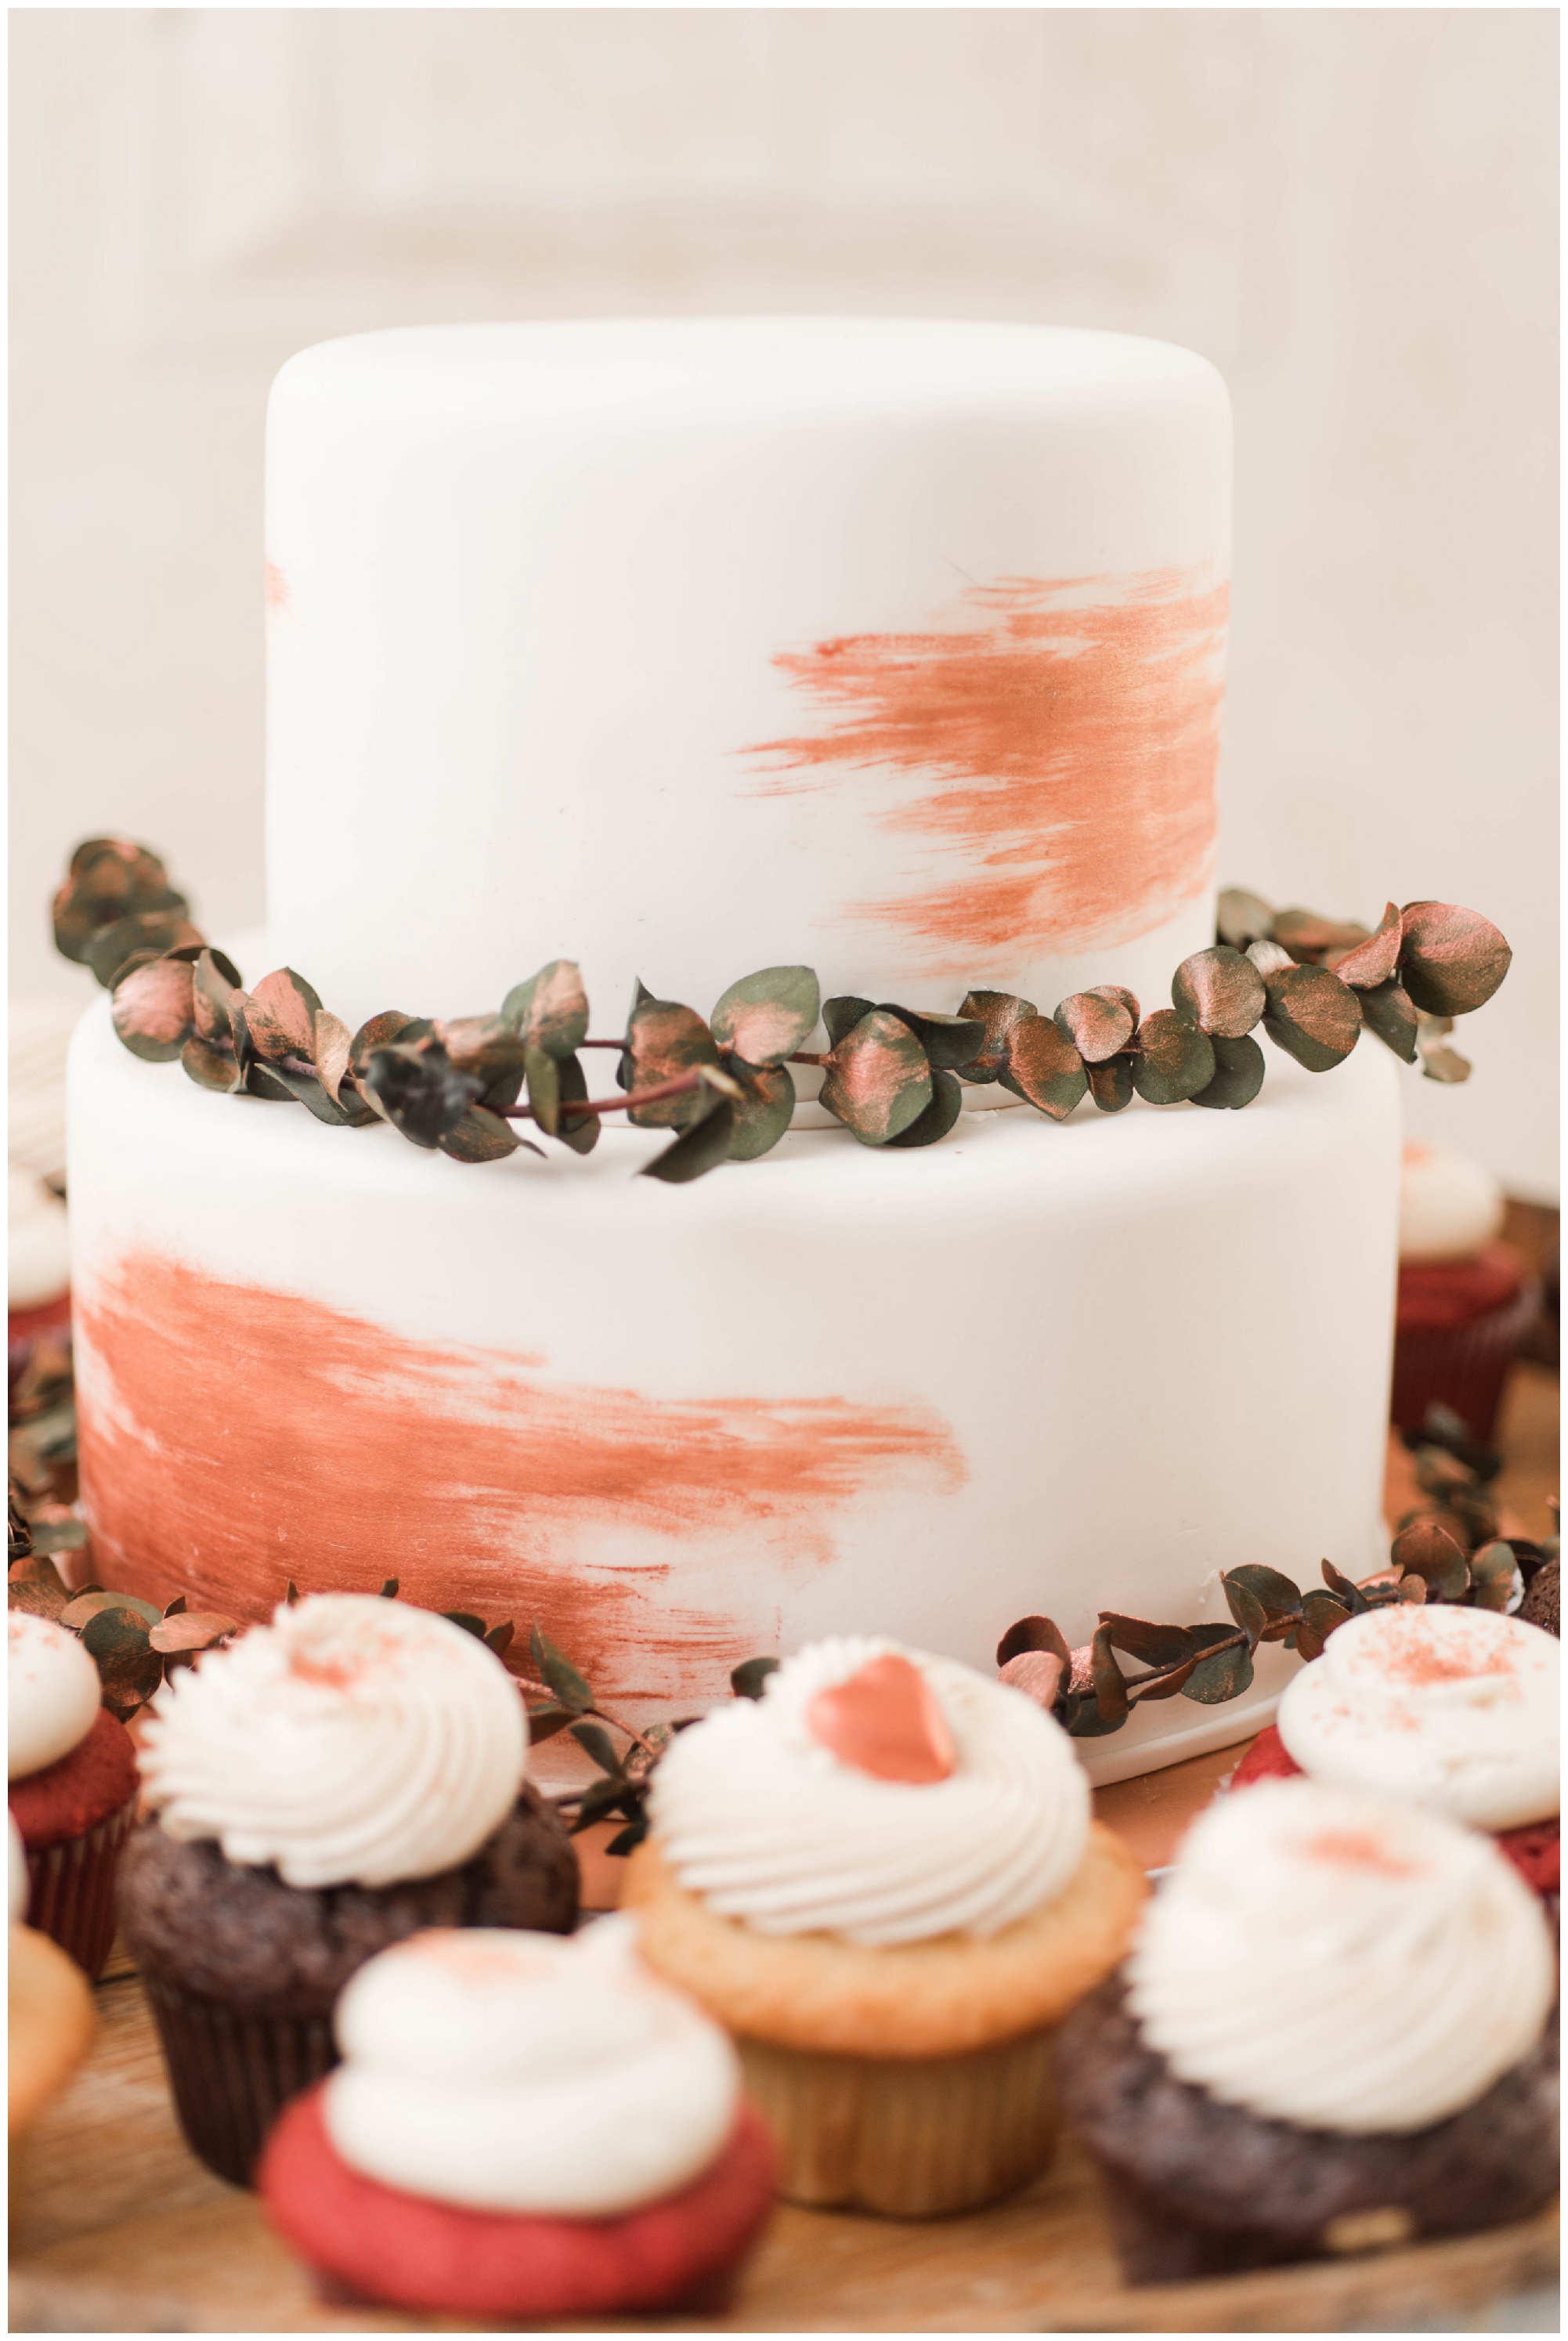 Molon Lave Vineyard Wedding cake